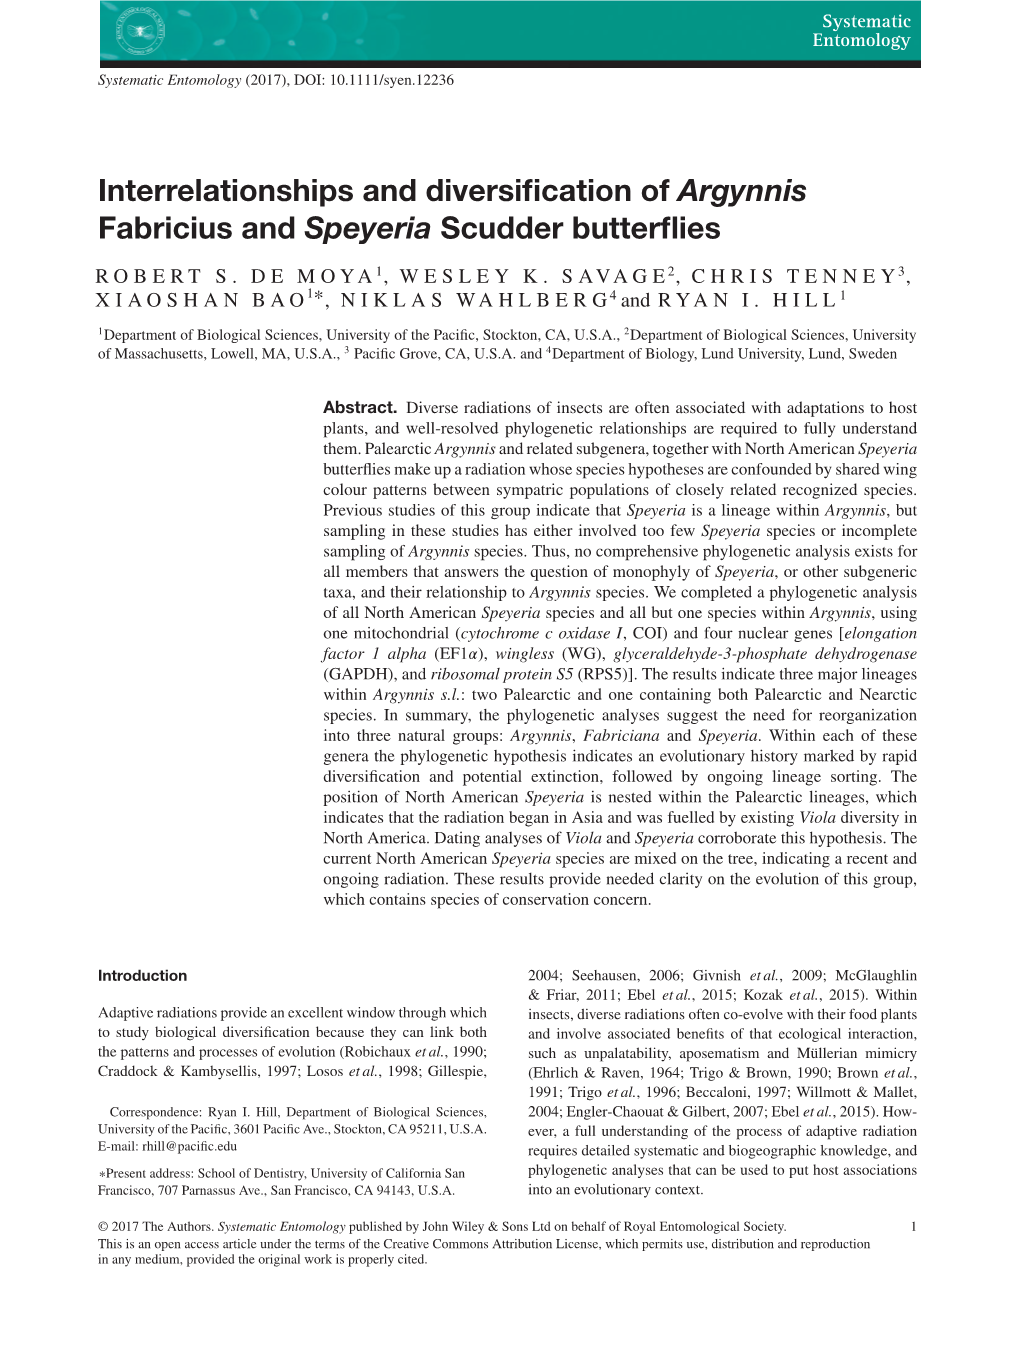 Argynnis and Speyeria Diversification 3